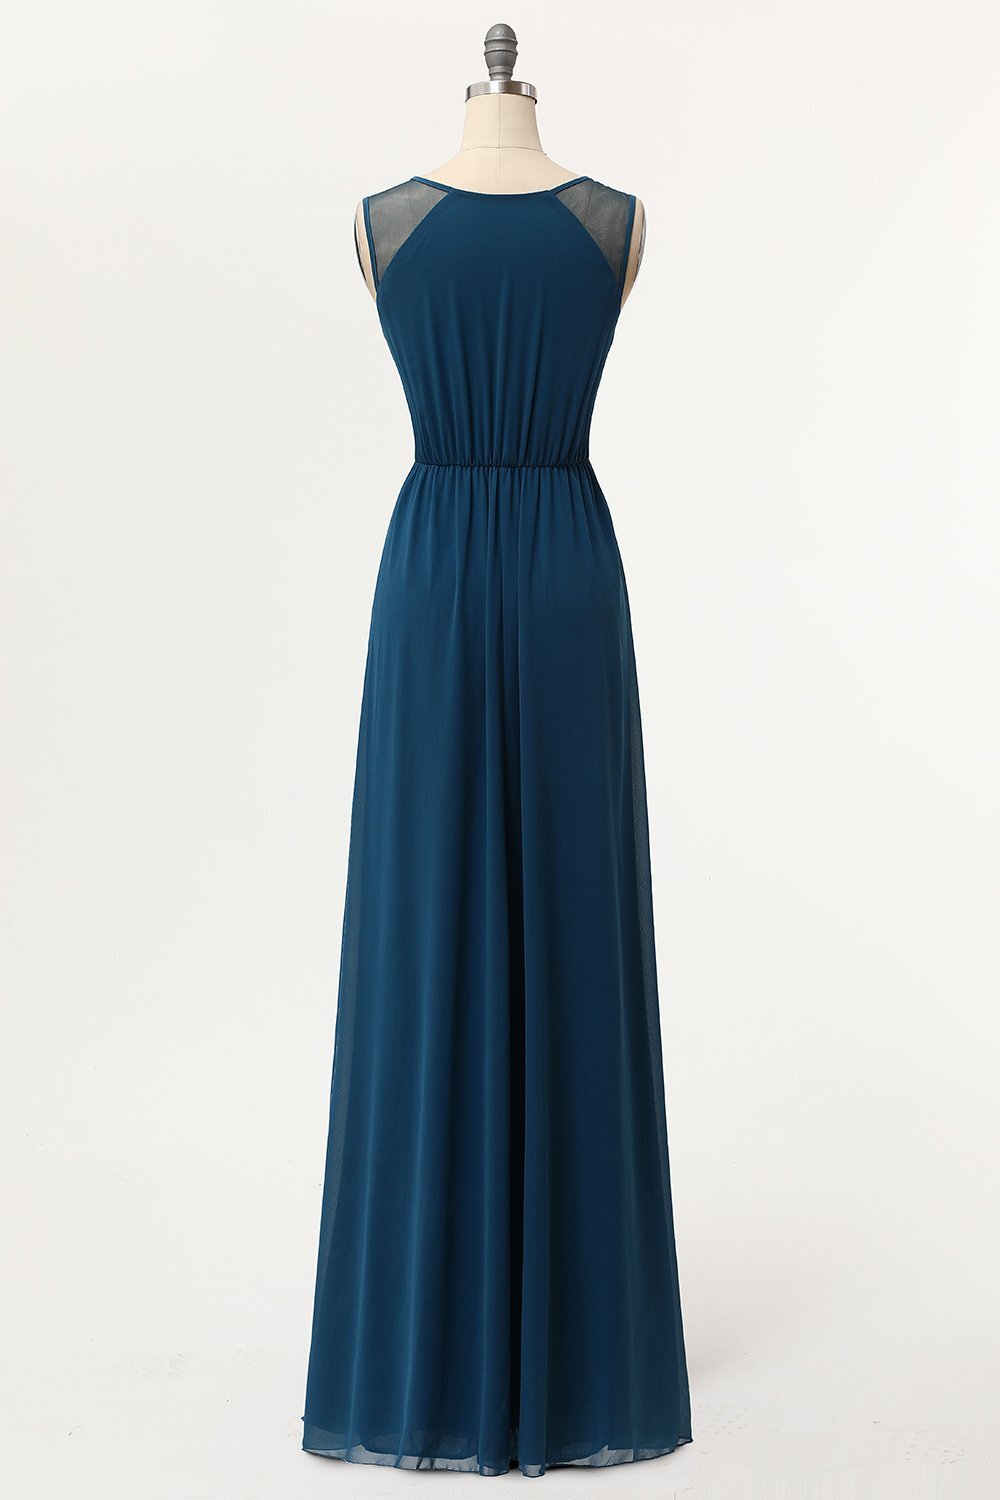 Scoop Navy Blue Chiffon Long Bridesmaid Dress